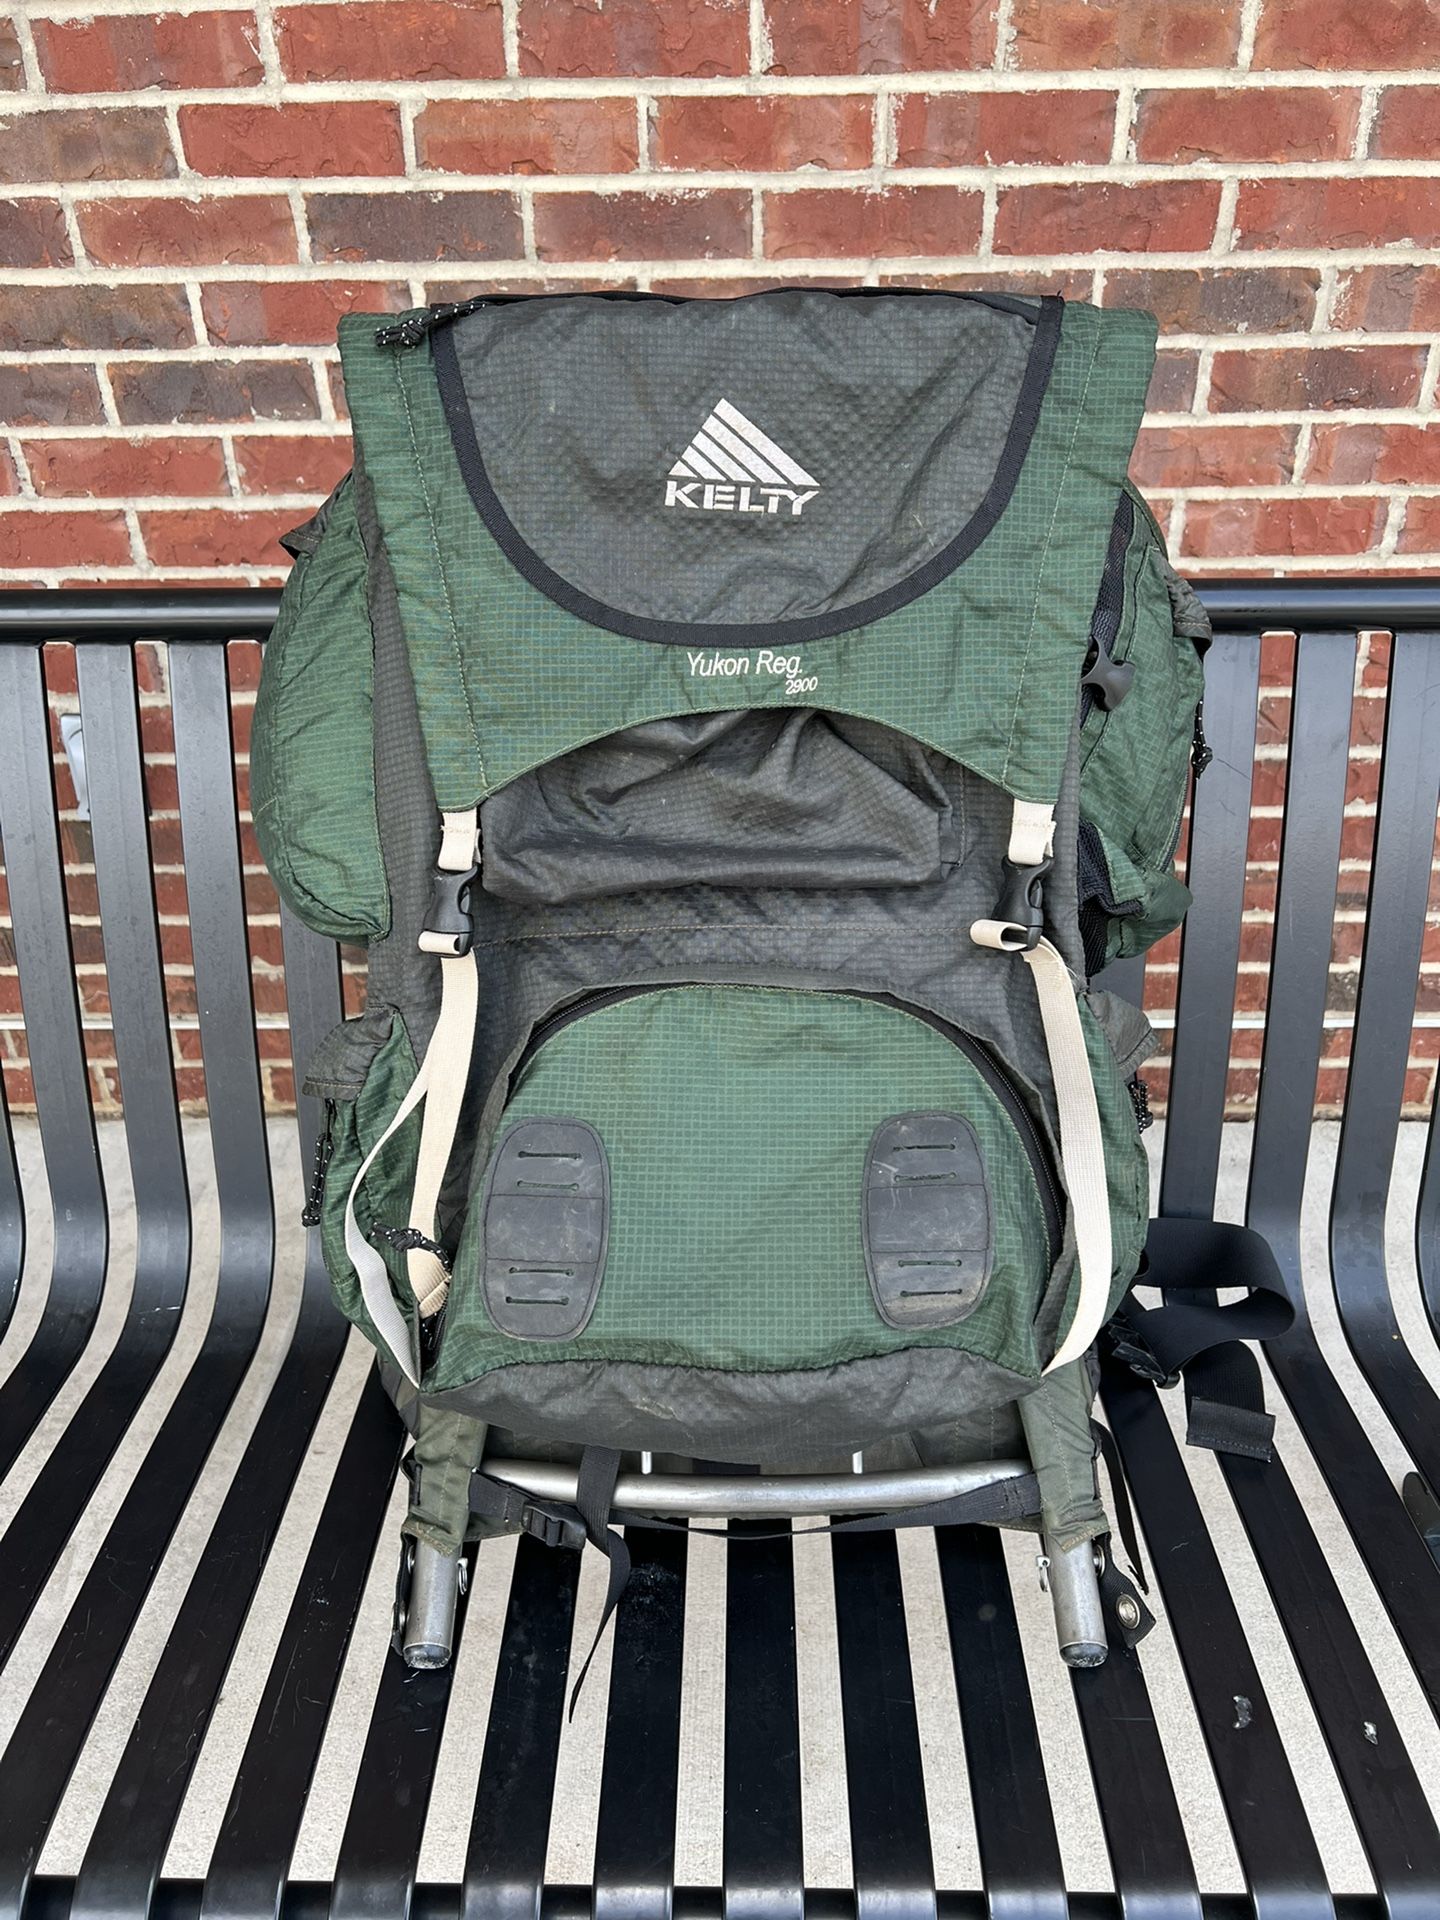 KELTY Yukon Reg 2900 Backpack External Frame Size 2 Green Grey Hiking Camping (Good condition)